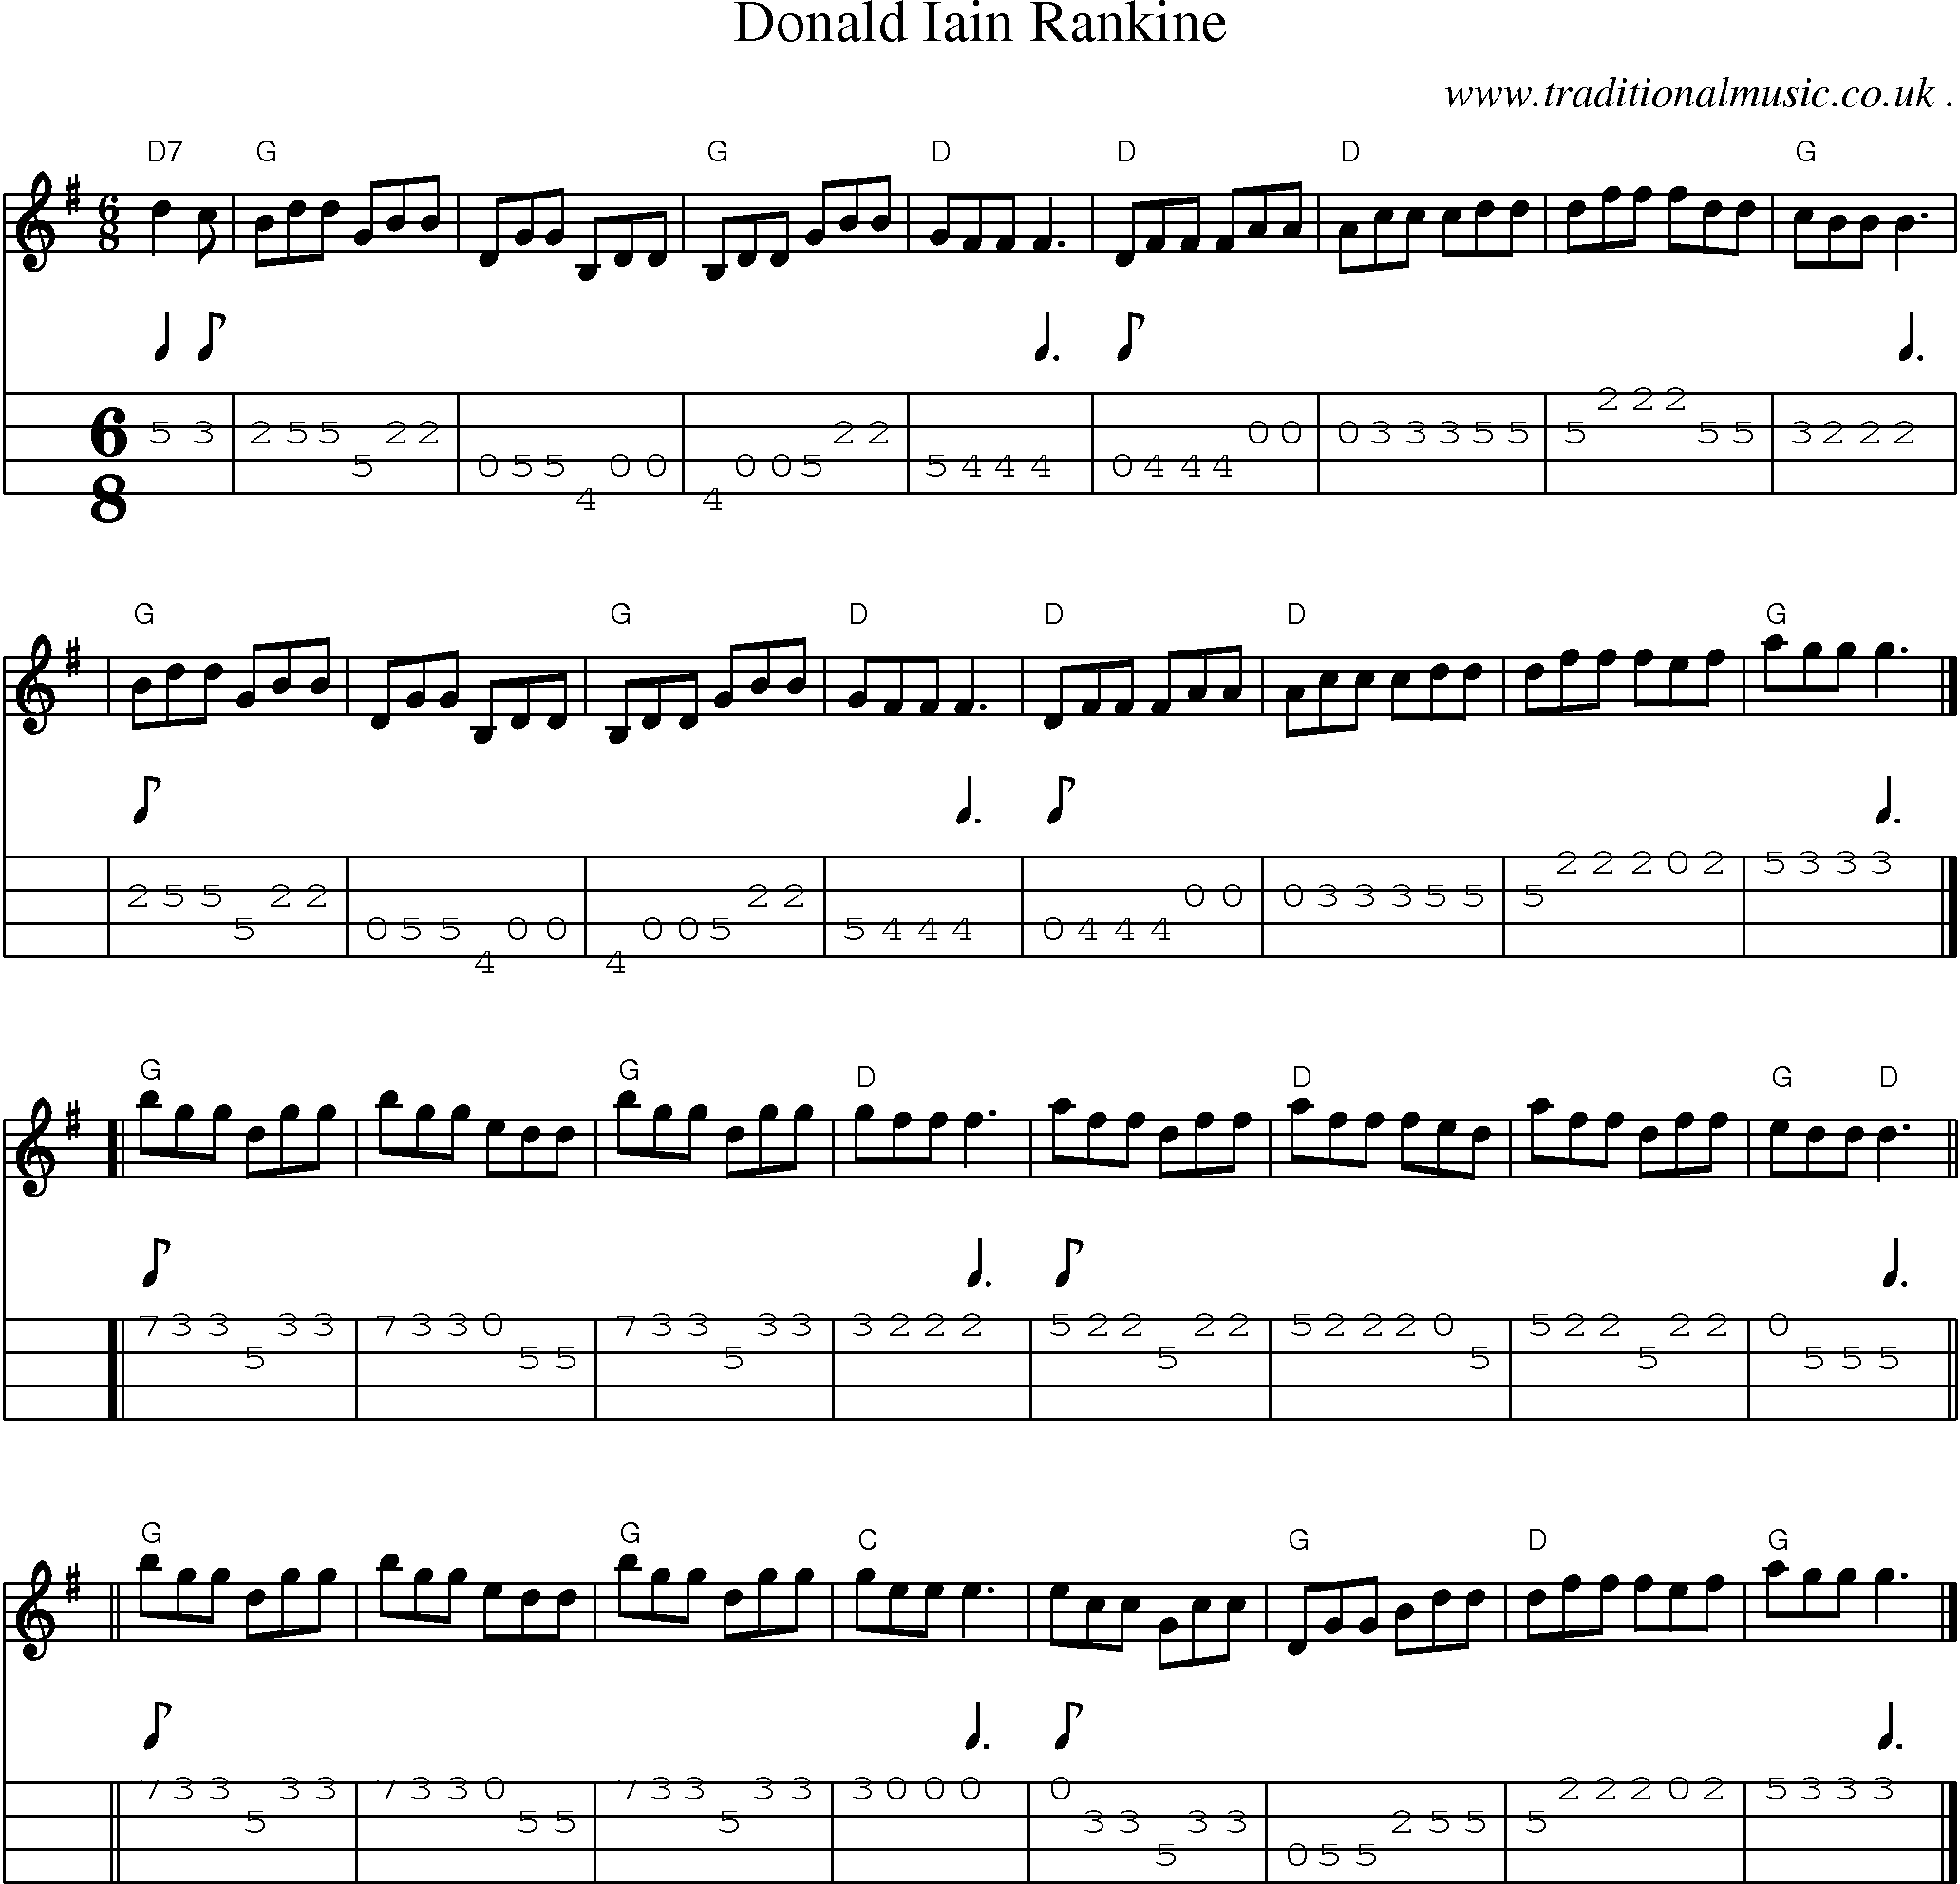 Sheet-music  score, Chords and Mandolin Tabs for Donald Iain Rankine